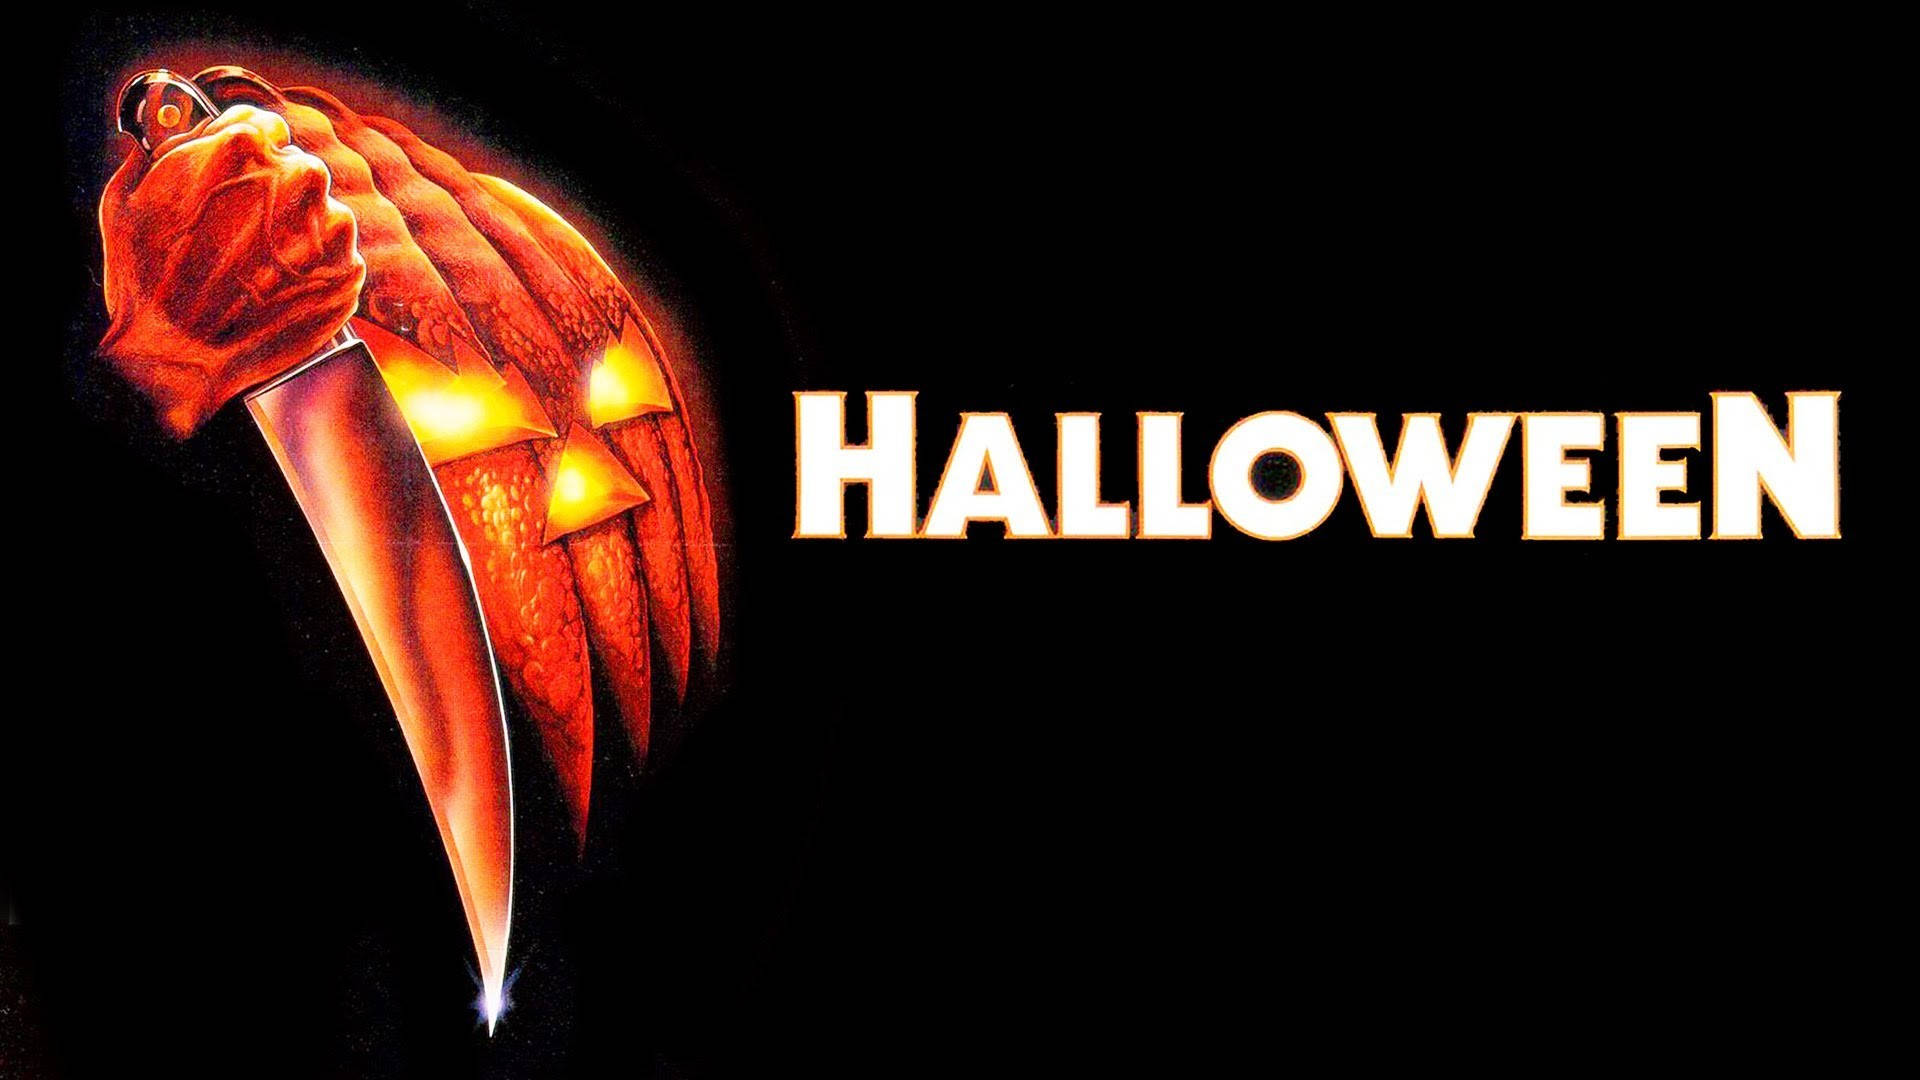 Download Classic Horror Movie Halloween Poster Wallpaper